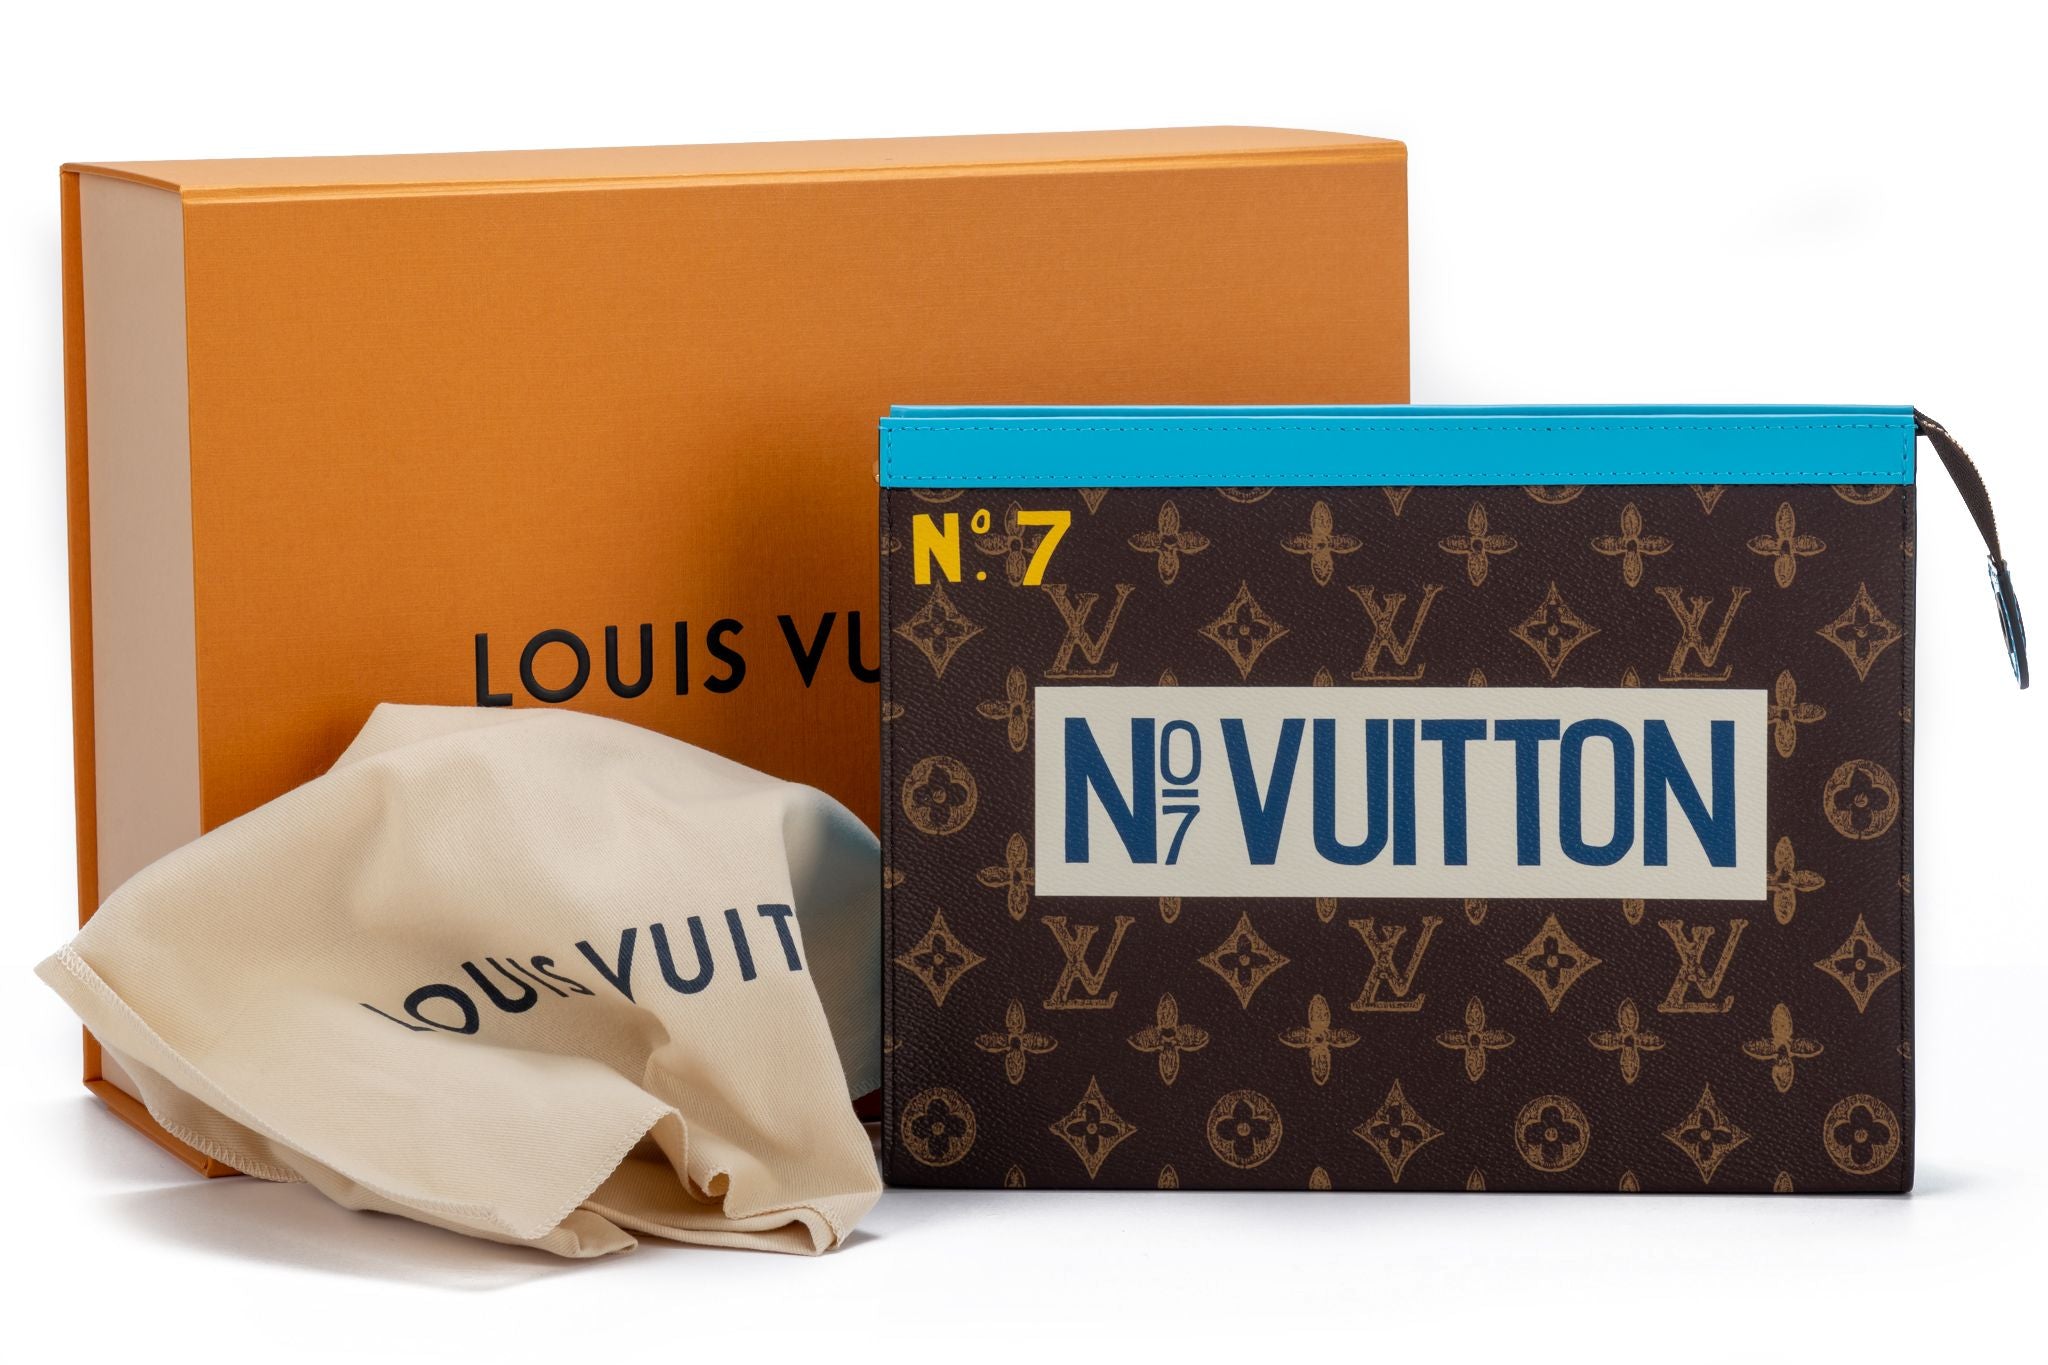 Louis Vuitton Men's 28 Navy Denim Jeans 1222lv31 For Sale at 1stDibs